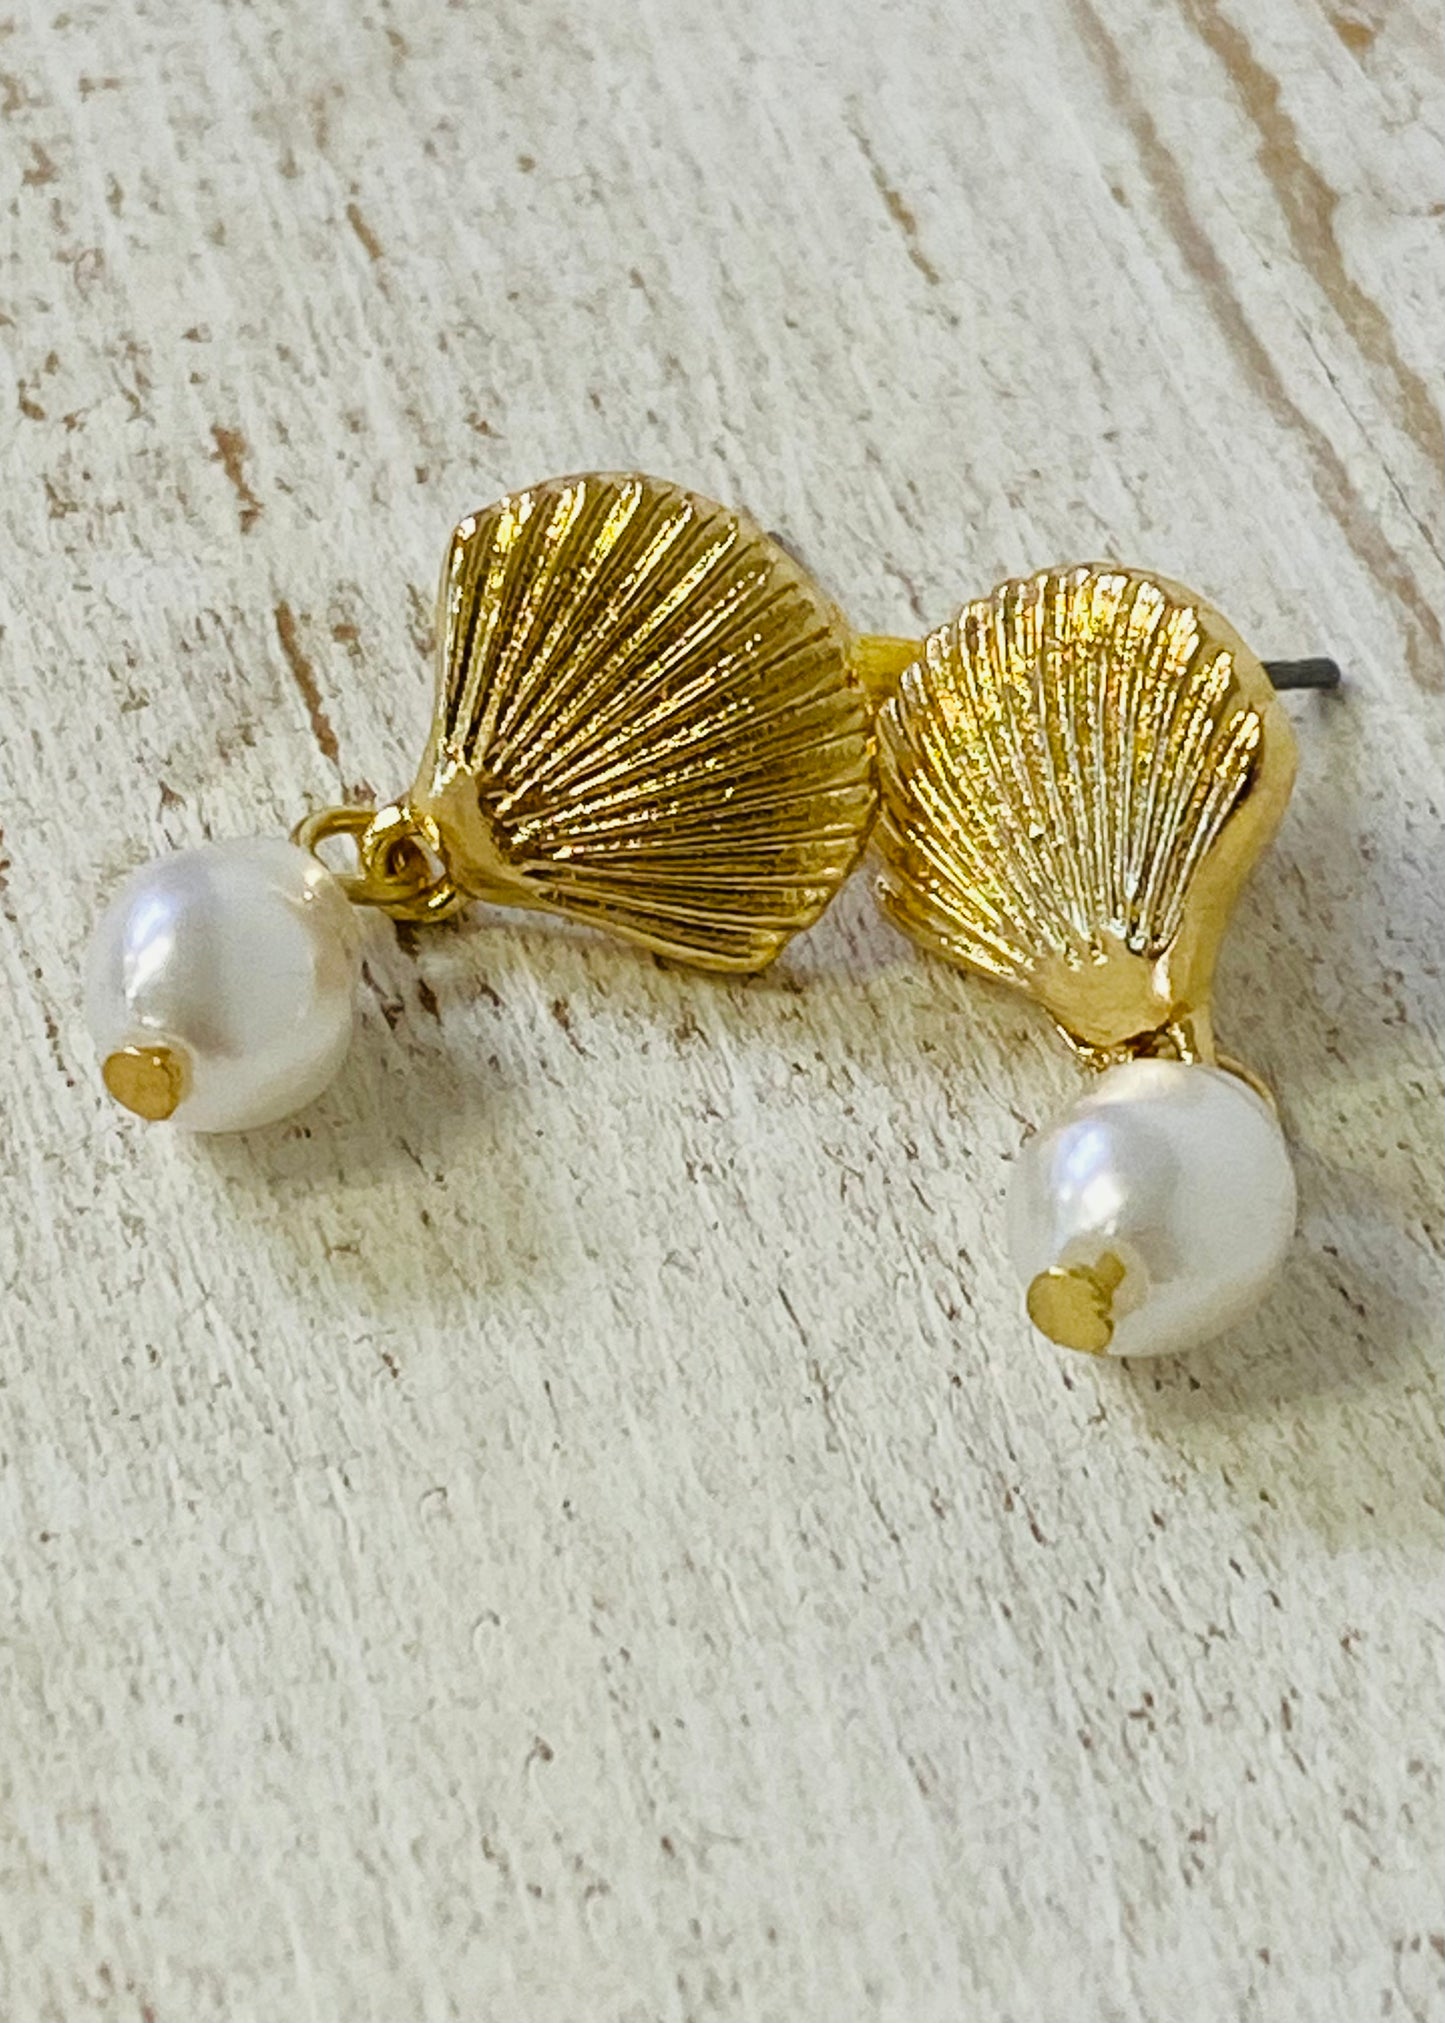 Oceania Earrings